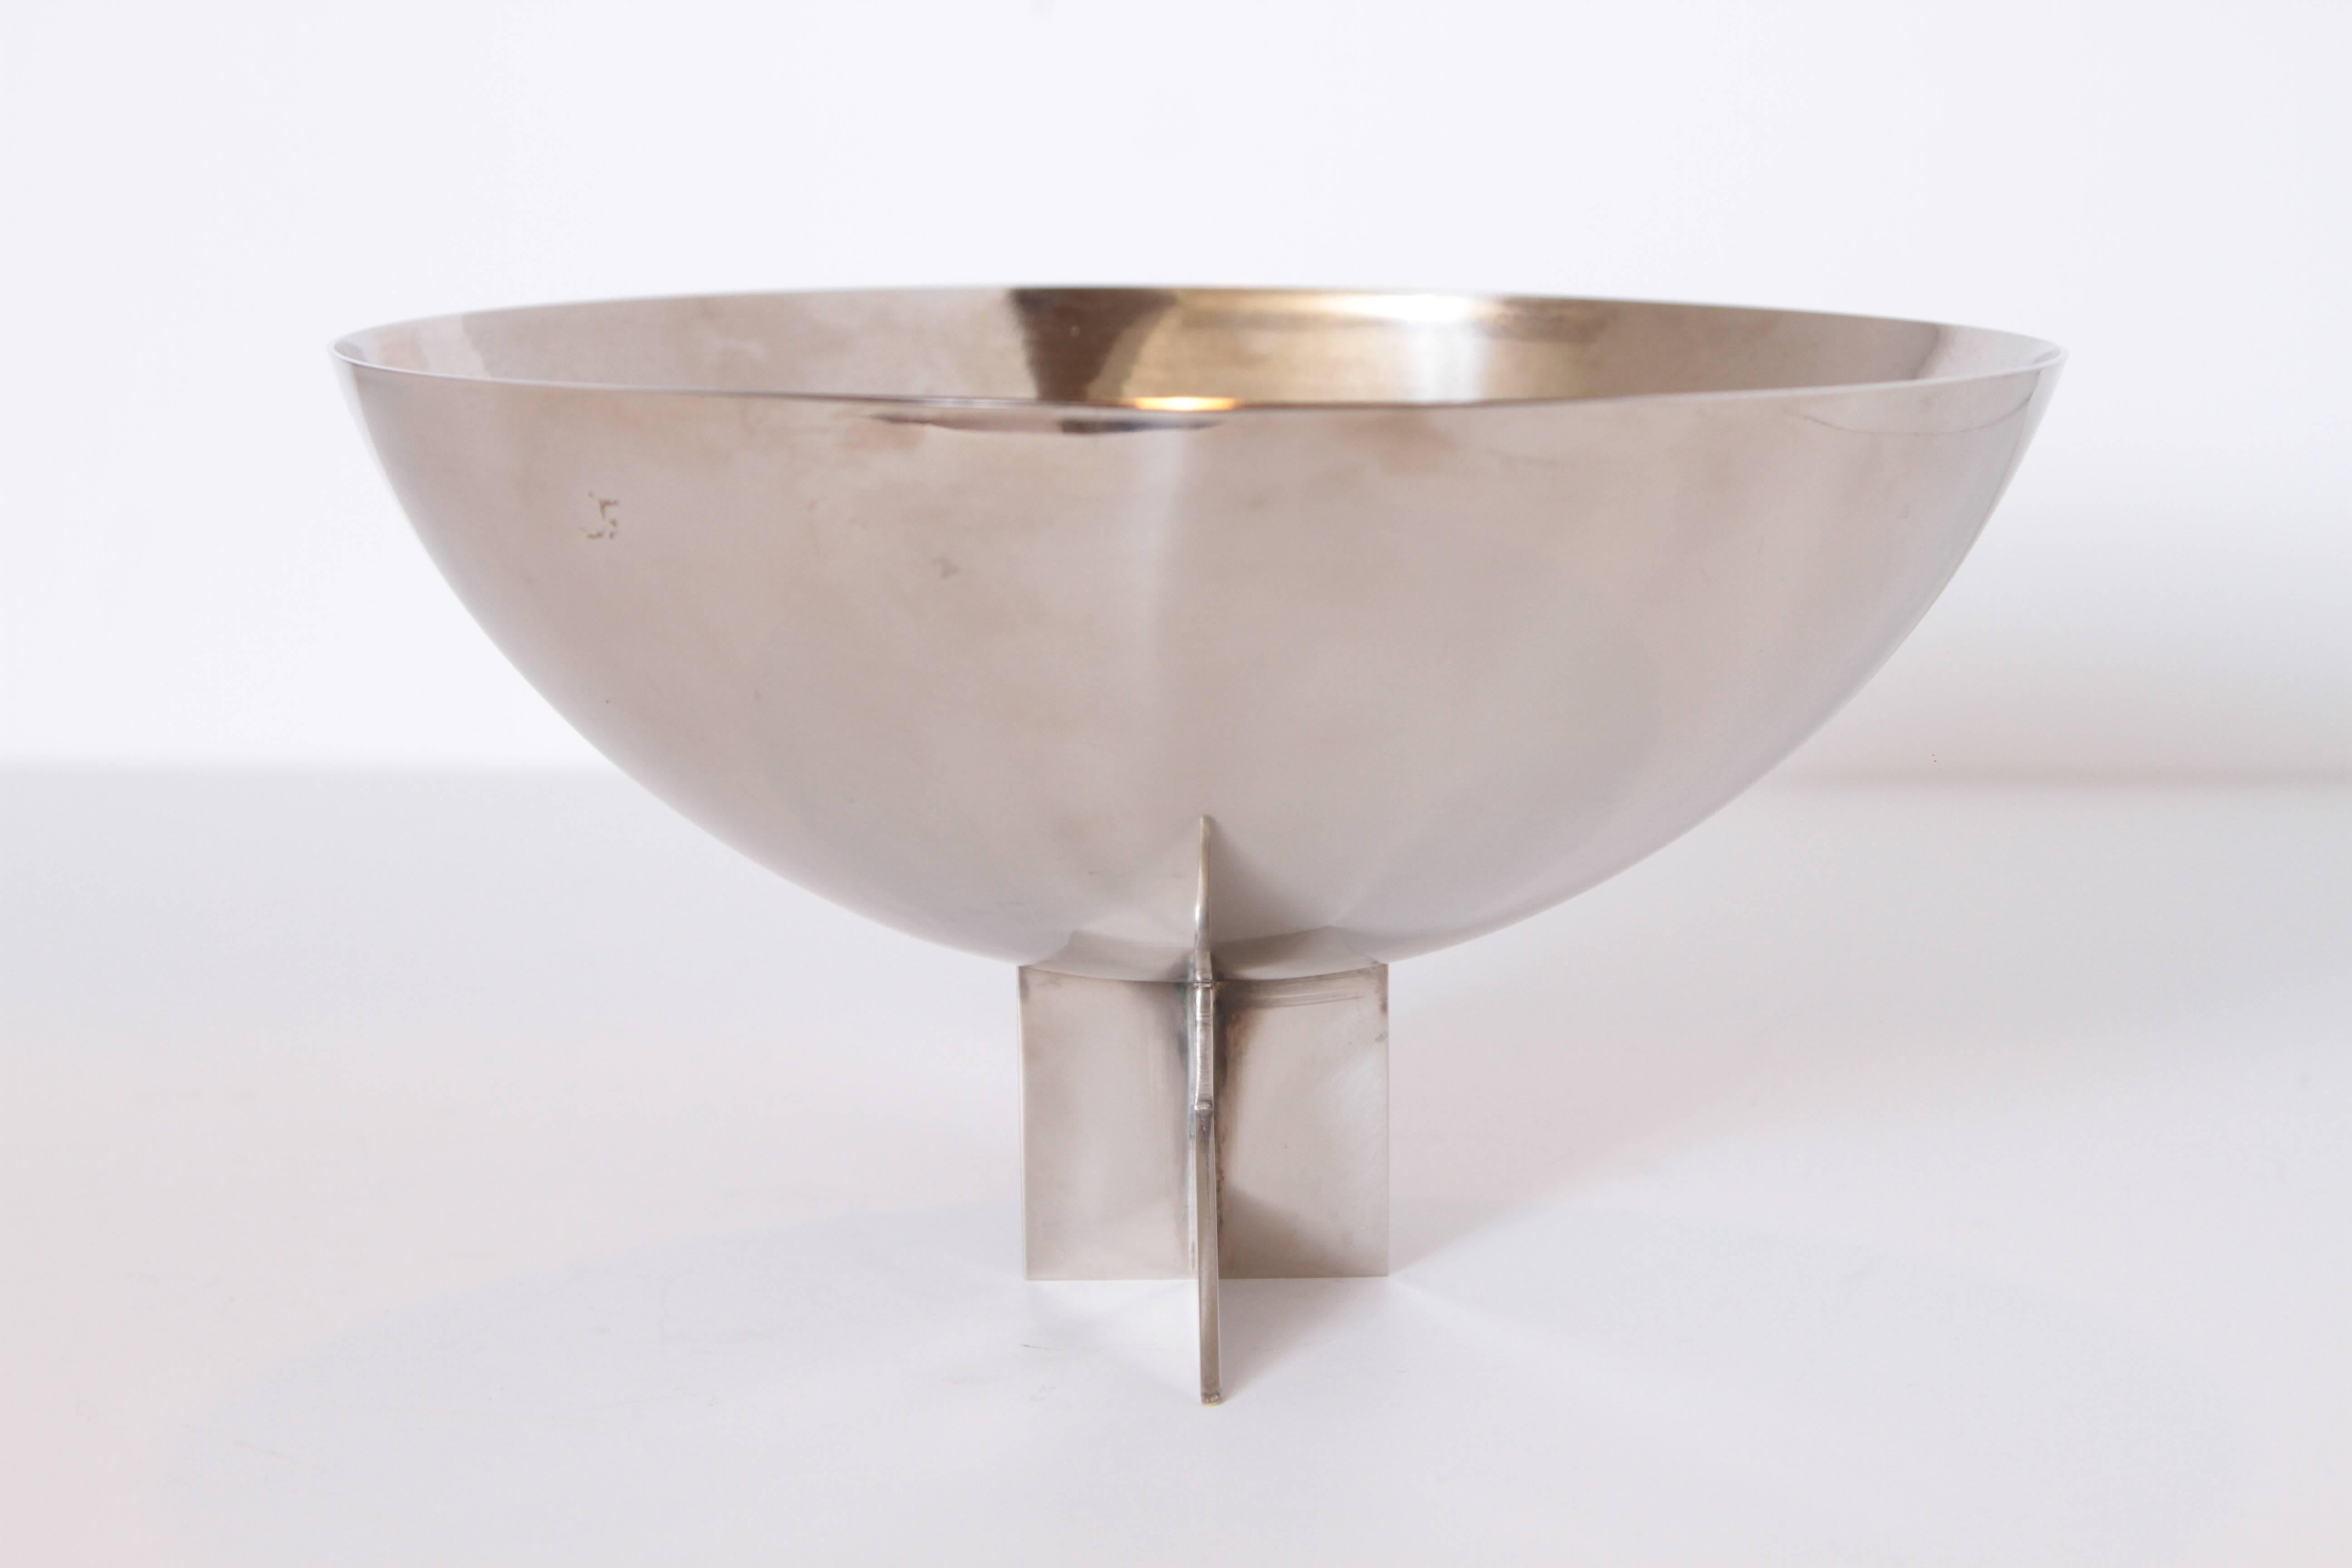 Machine Age Art Deco Signed Desny Silver Plate Centerpiece Bowl In Good Condition For Sale In Dallas, TX